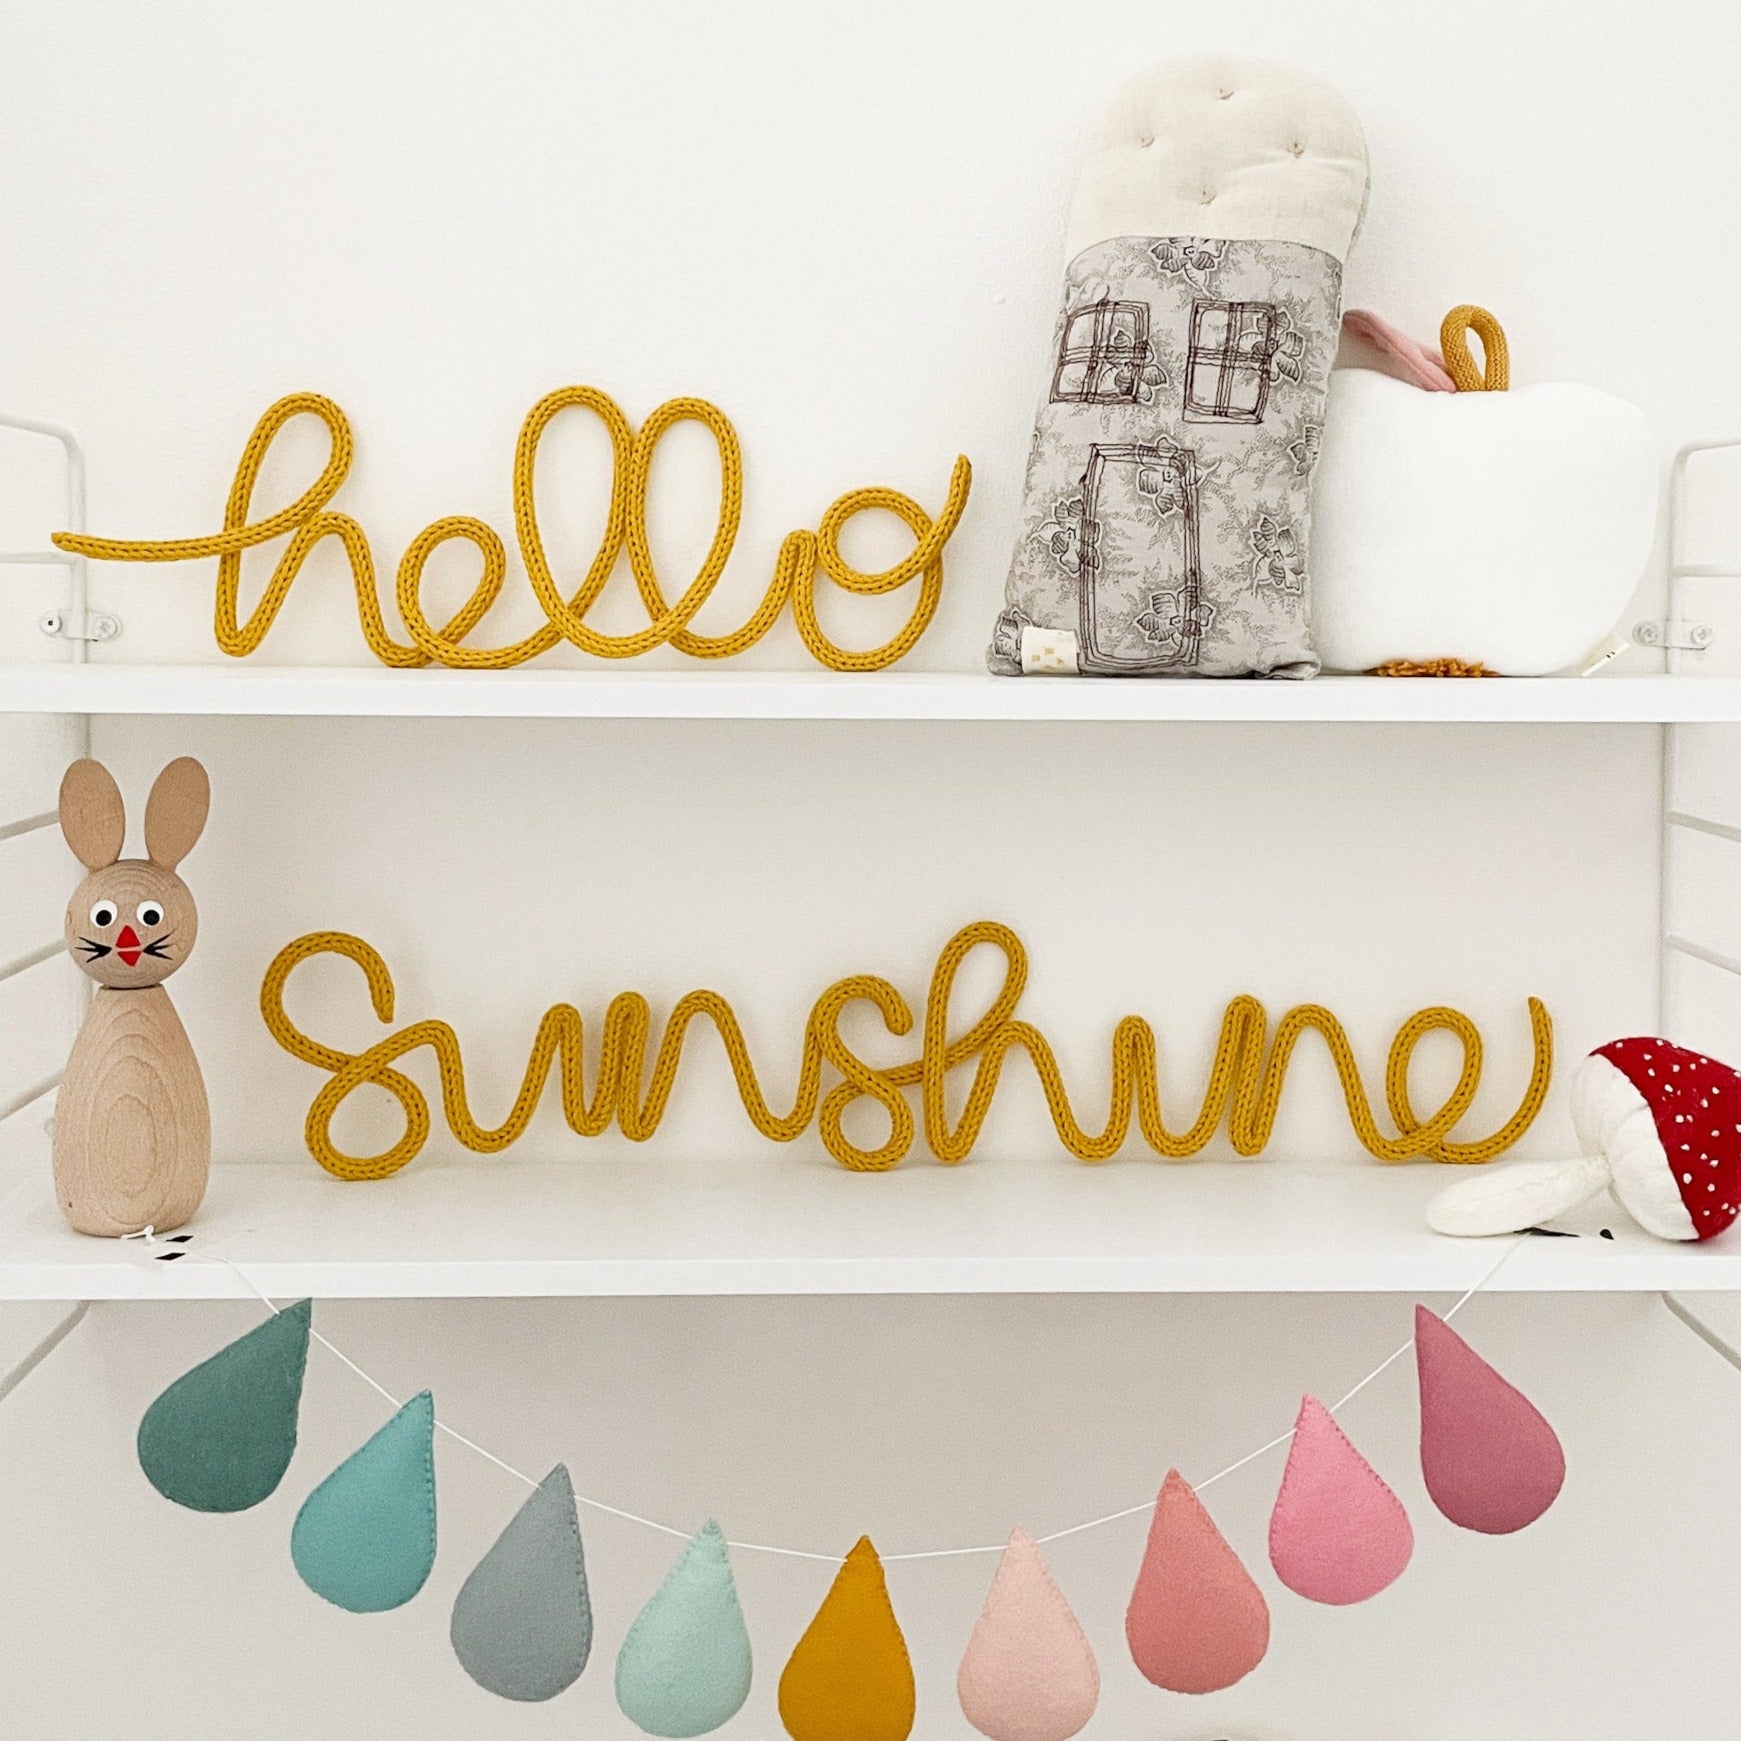 heykiddostudio 'Hello Sunshine' Word Wall Sign